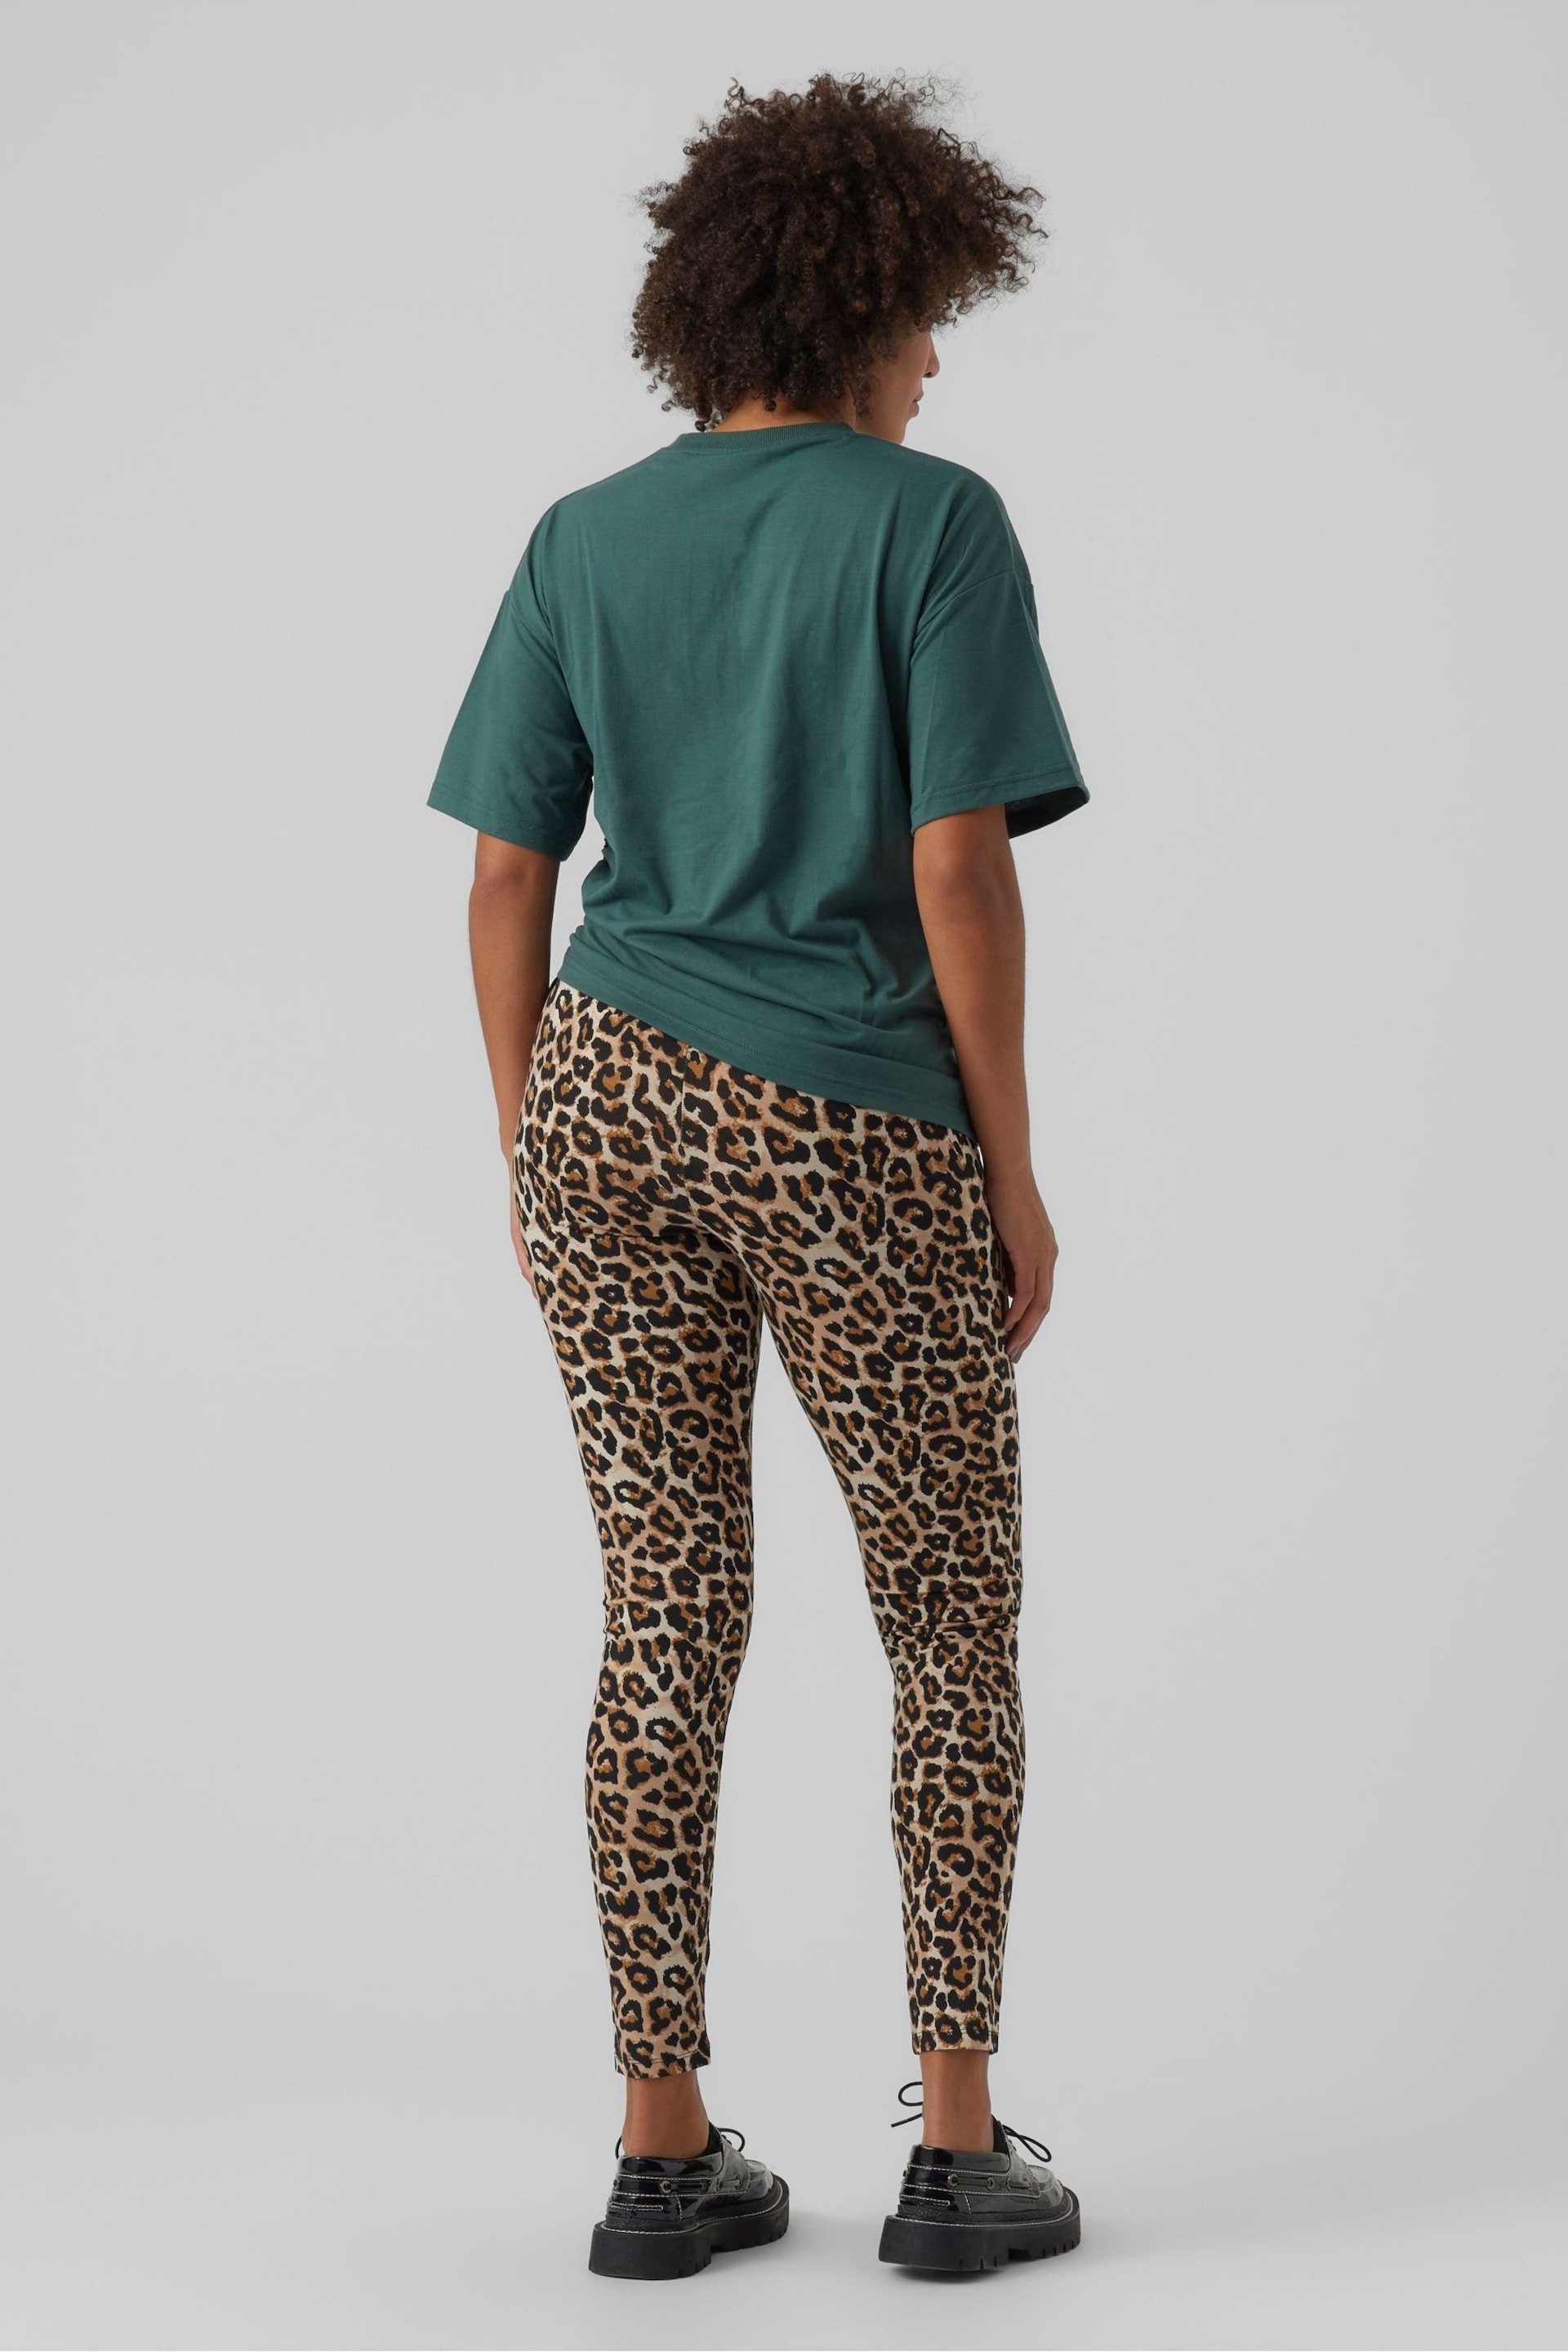 Mamalicious Black & Leopard Print Maternity 2 Pack Leggings - Image 3 of 6